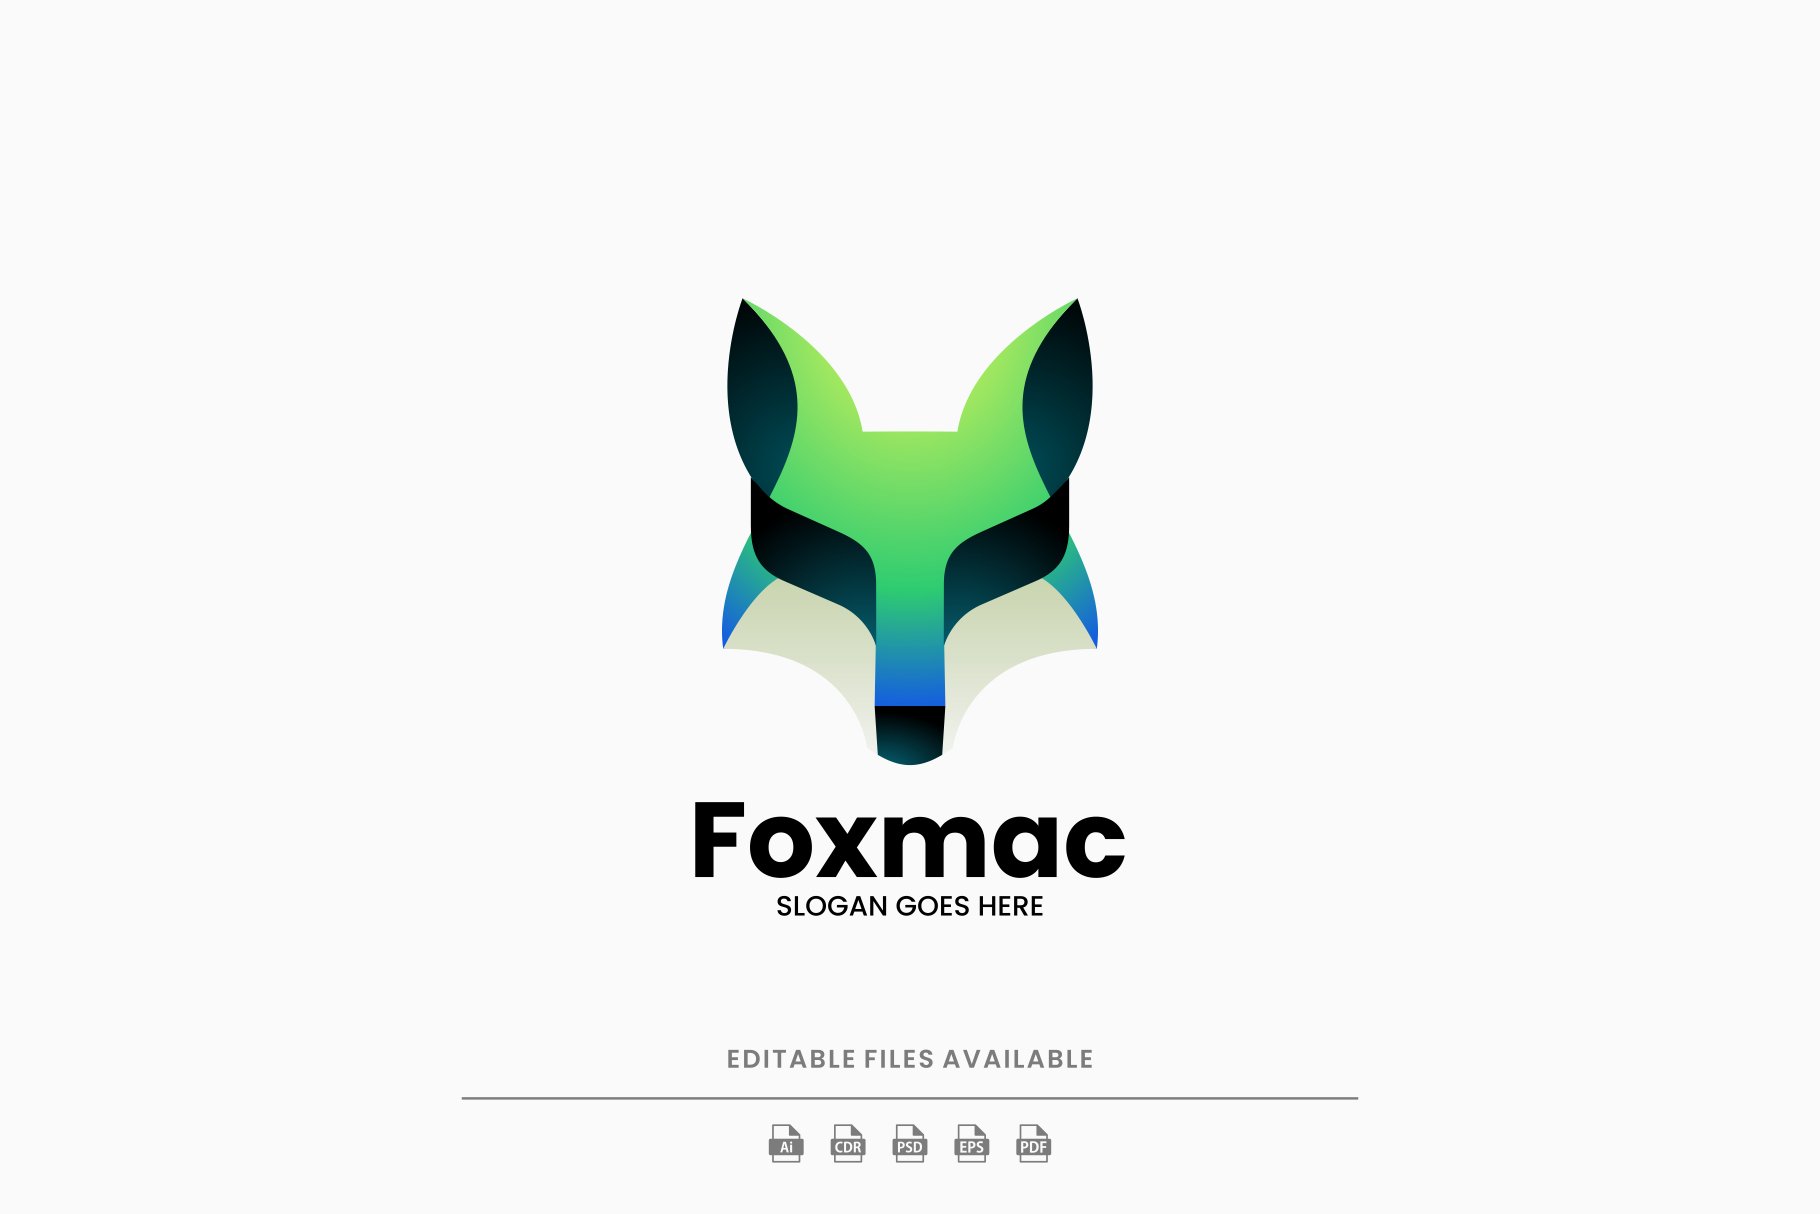 Fox Gradient Logo cover image.